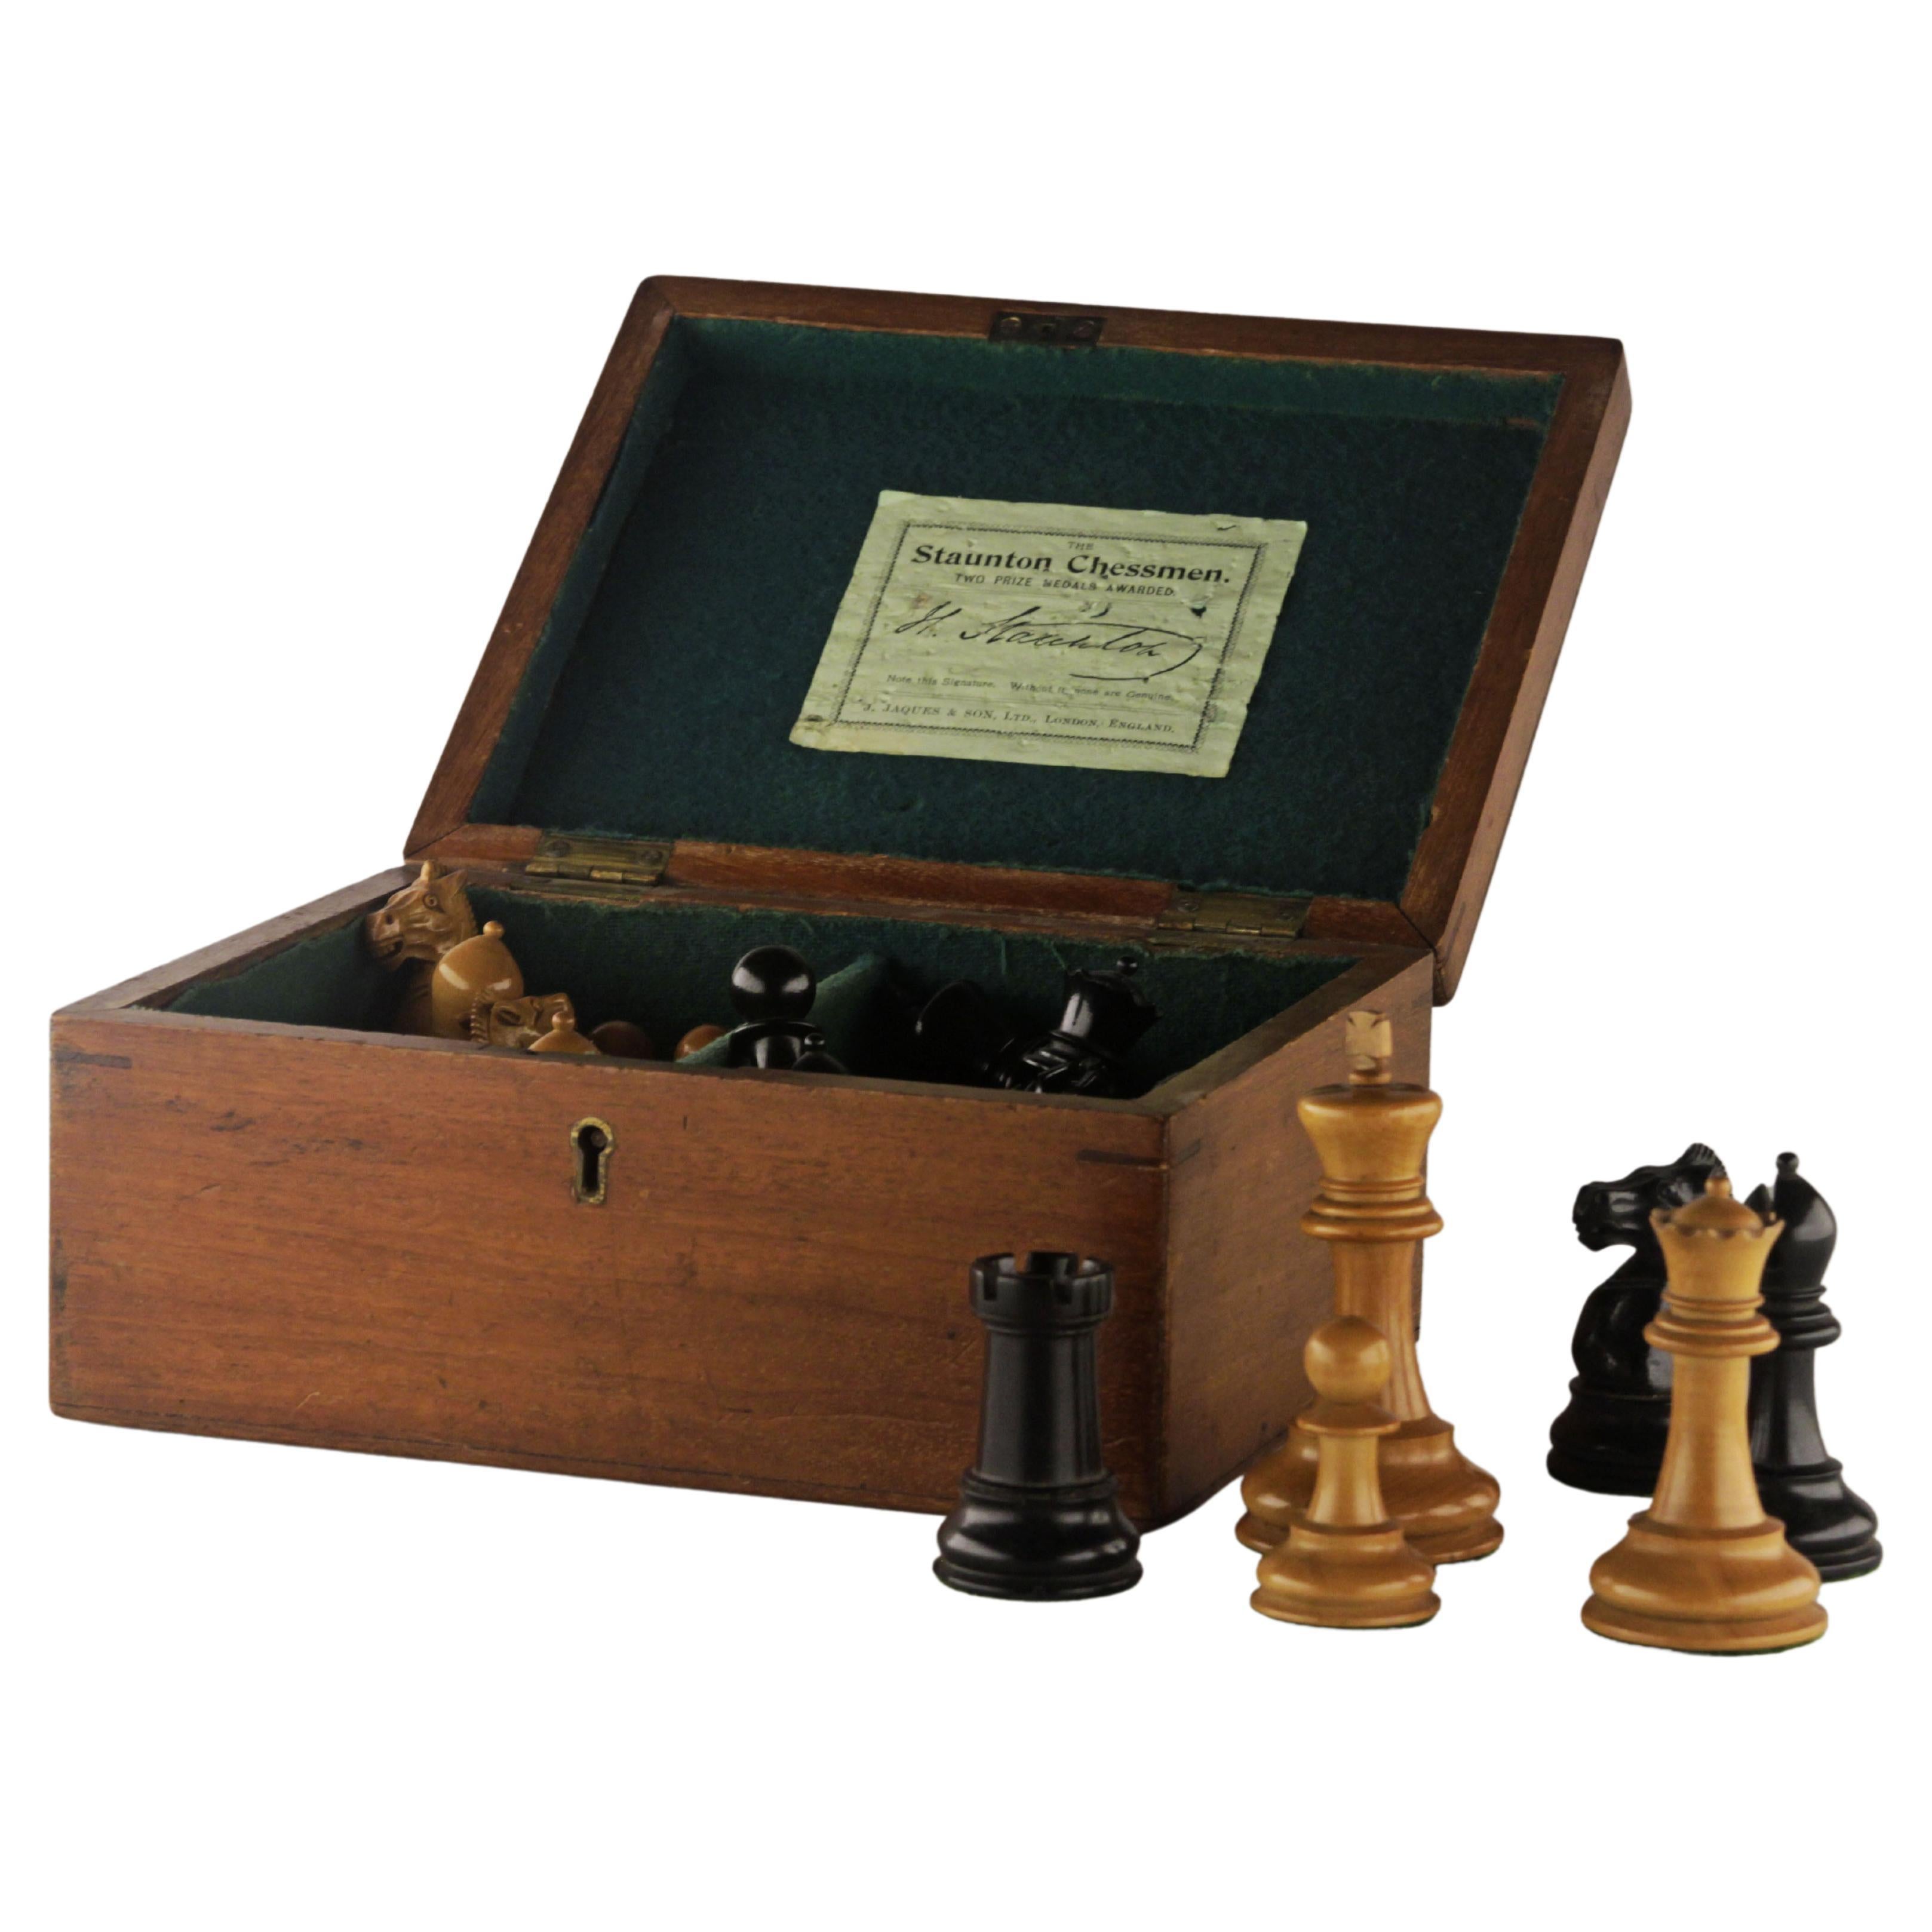 Staunton Chess Set, circa 1930